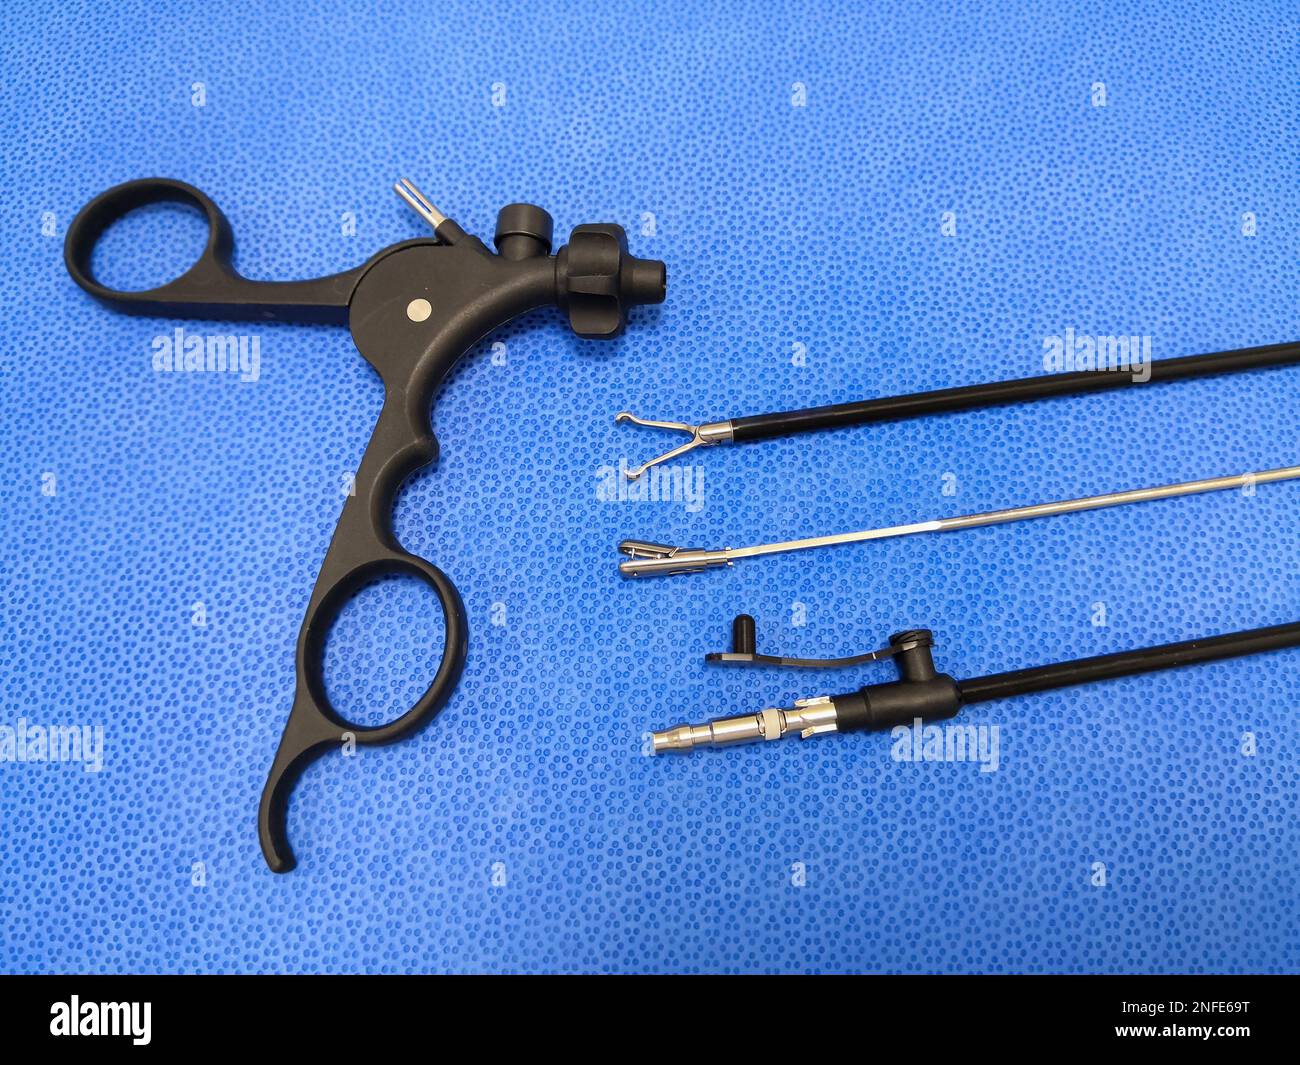 Closeup Image Of Dismantled Laparoscopic Instruments Or Parts Of Laparoscopic Instruments Stock Photo